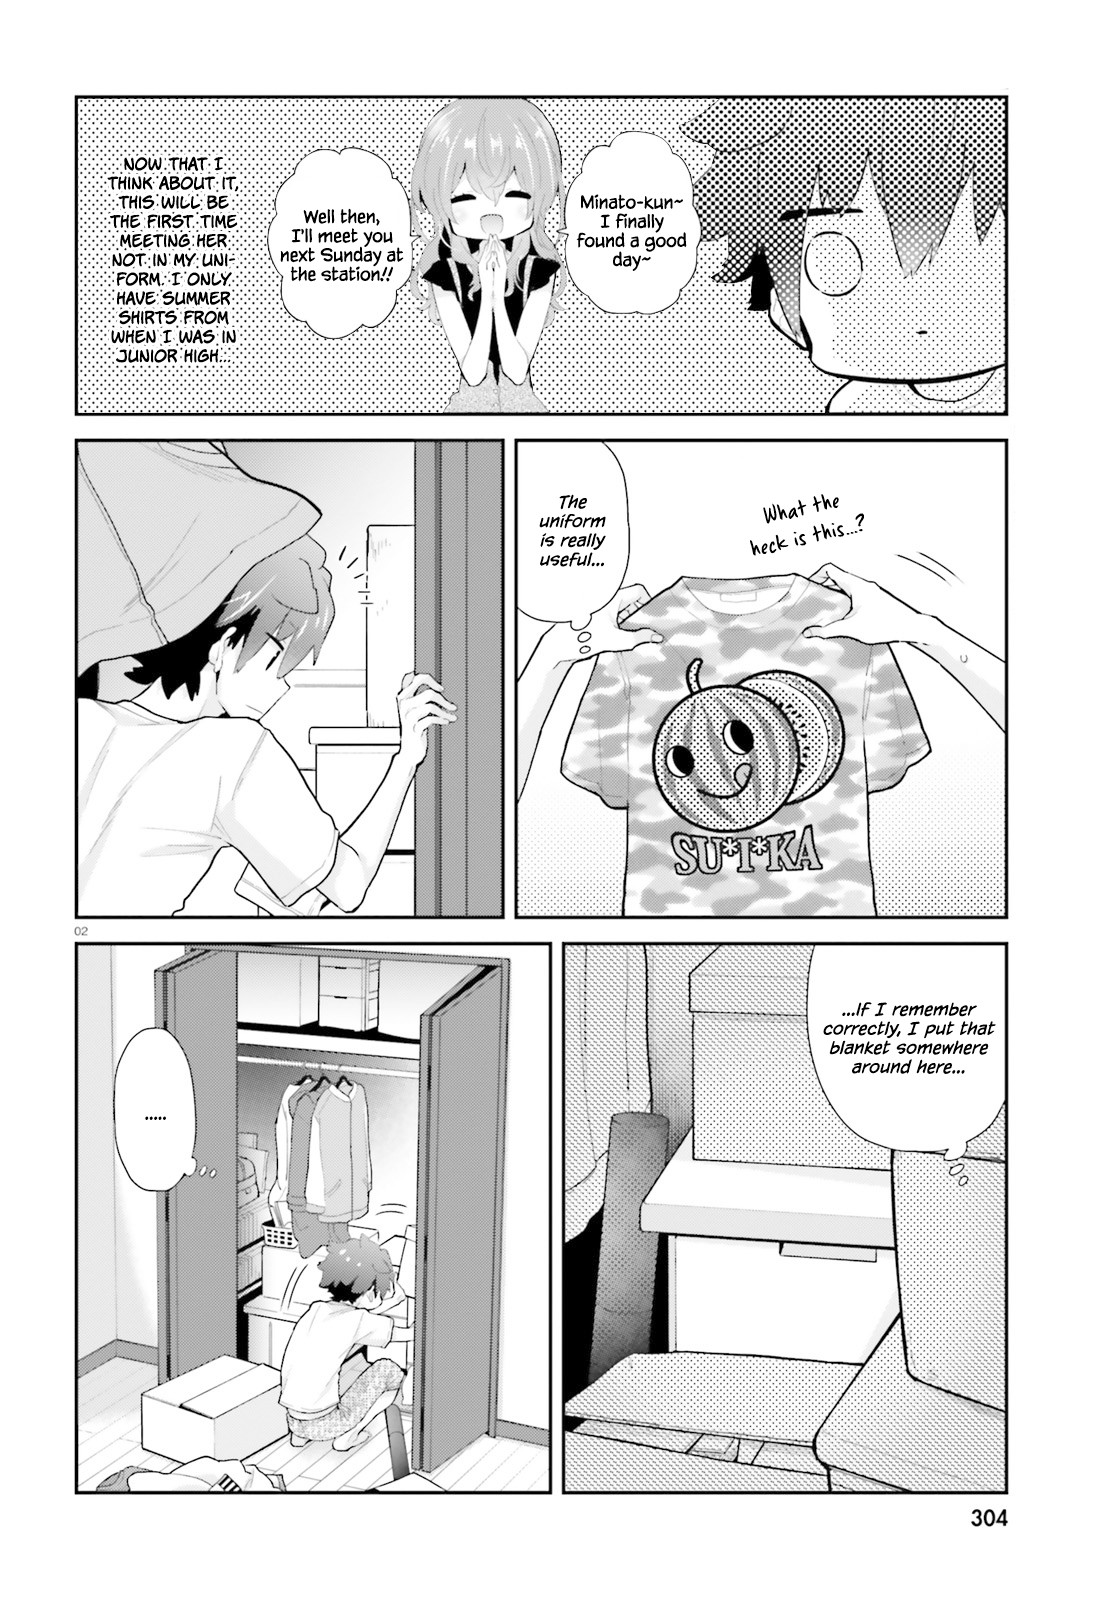 Mofu O Neesan No Atatame-Kata - Page 3